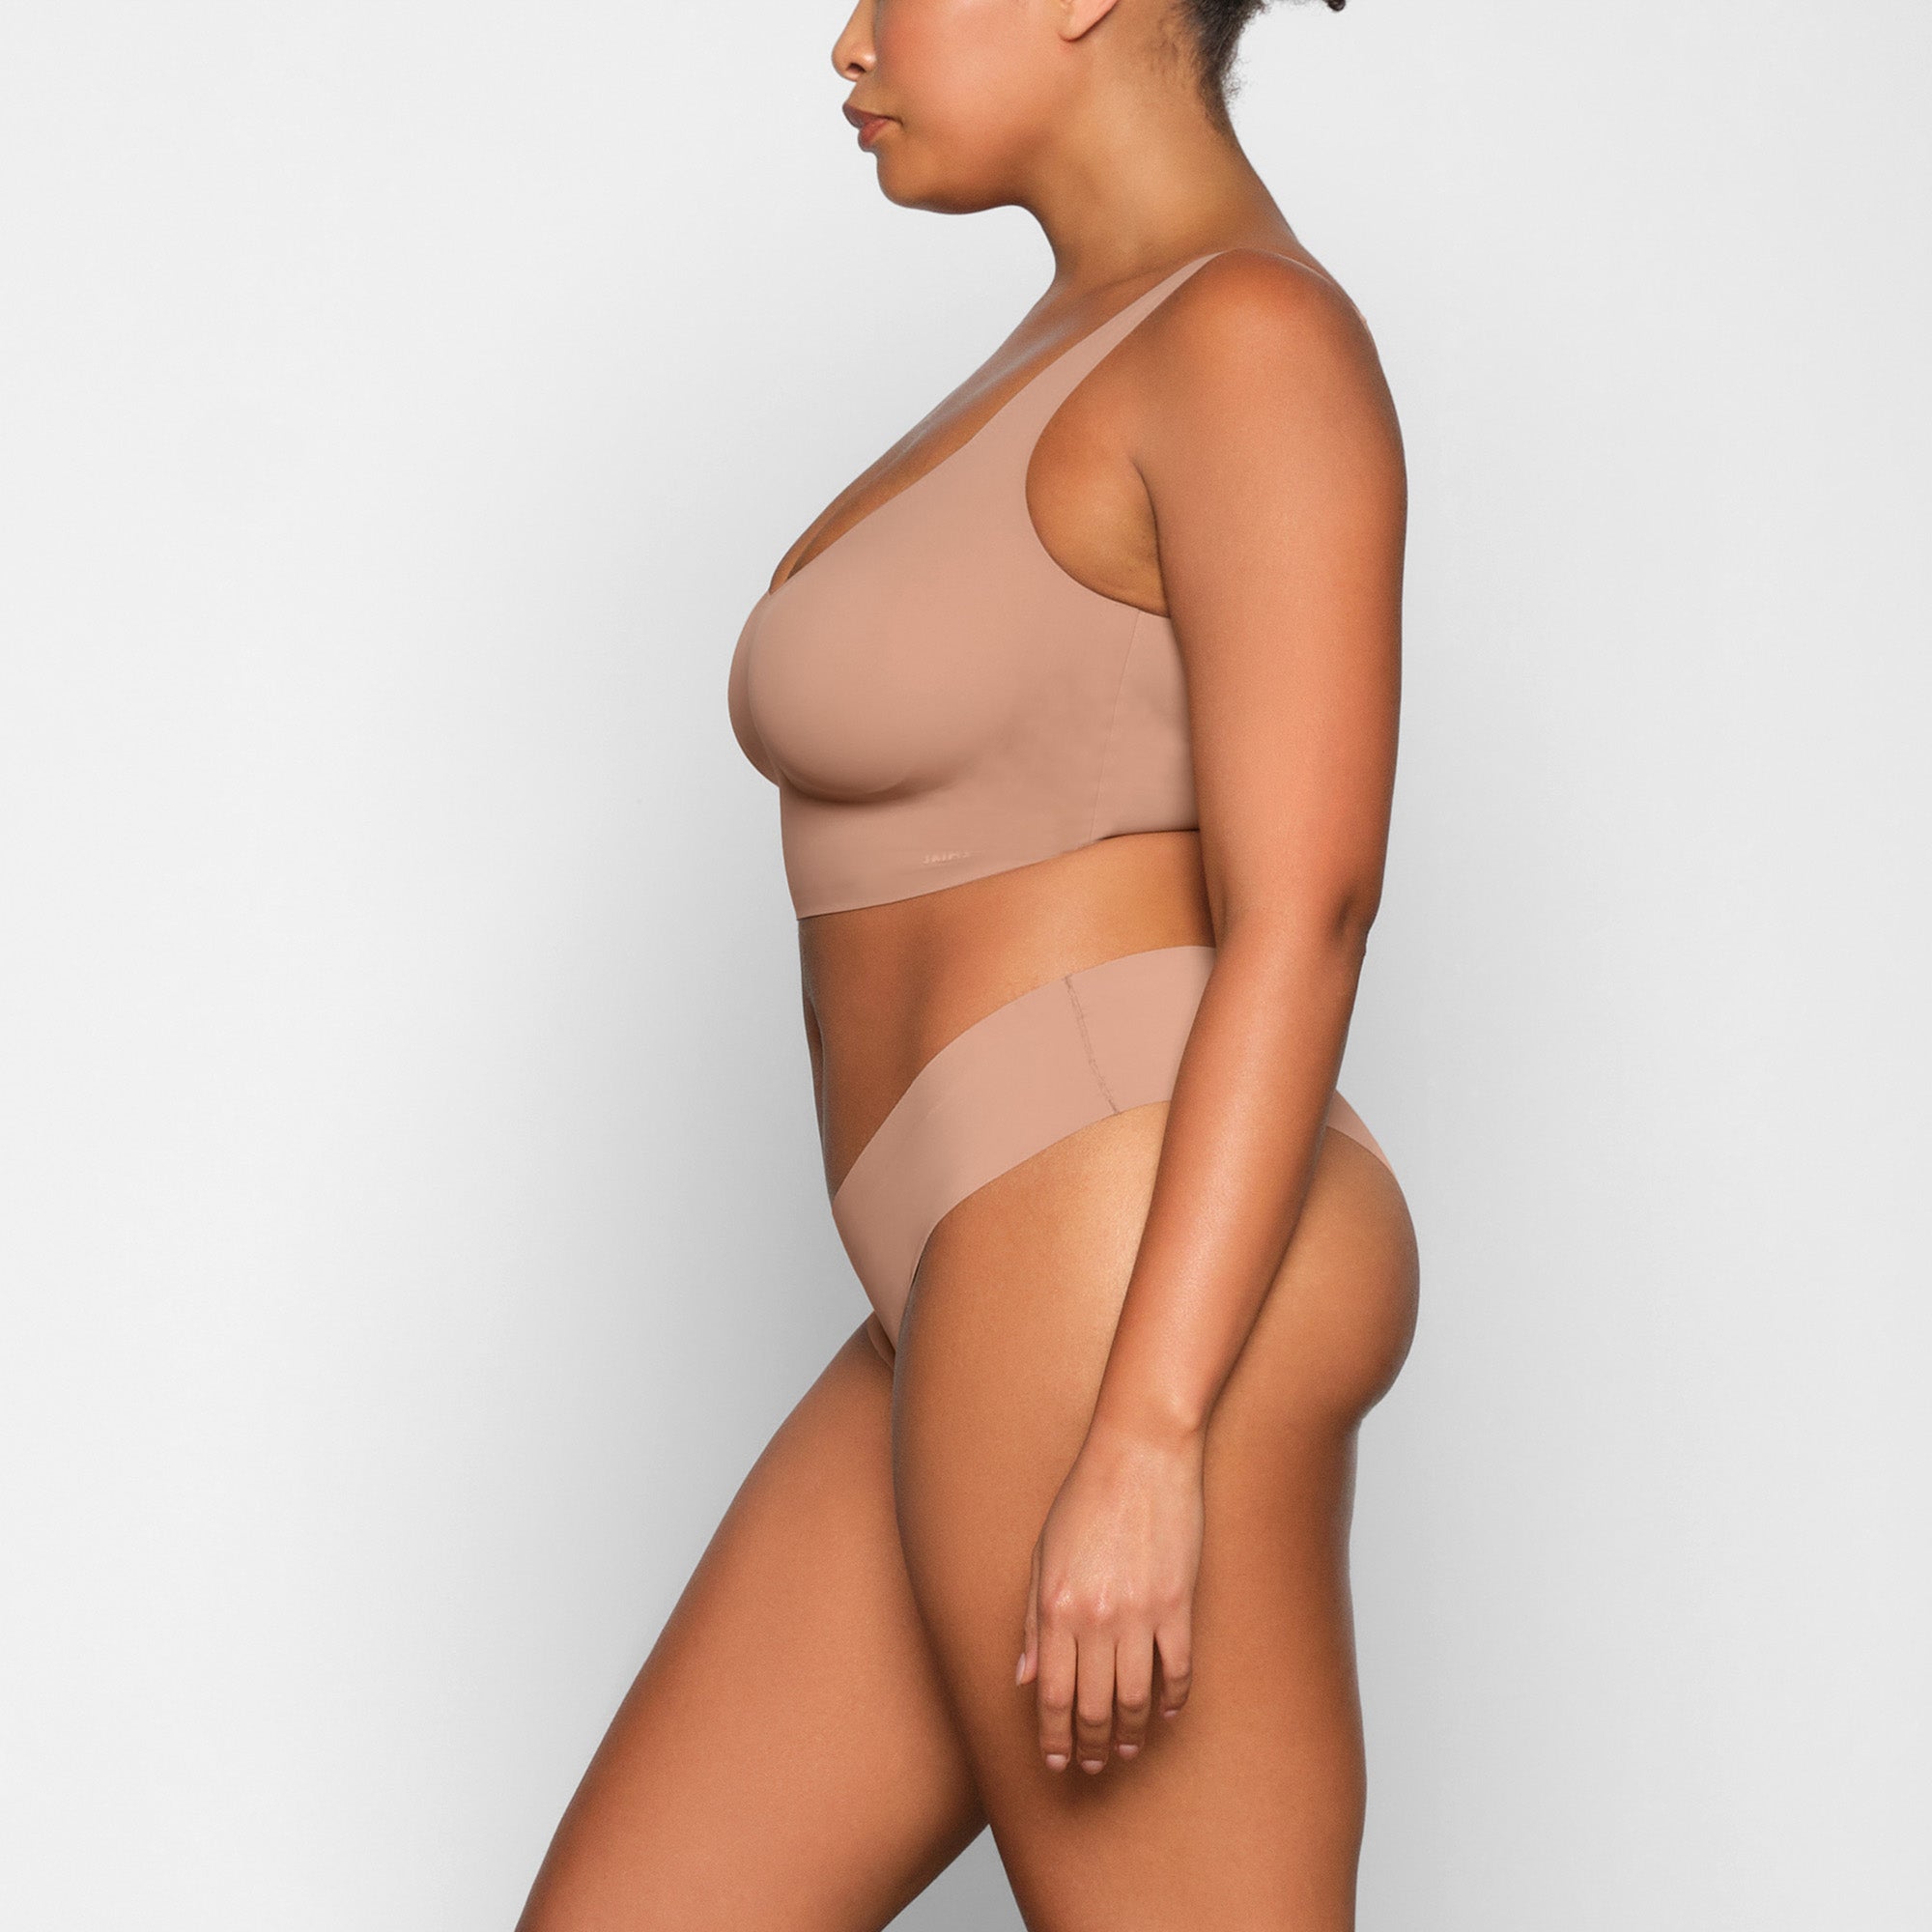 SKIMS Naked Plunge Bra 38B NWT Tan Size 38 B - $29 (62% Off